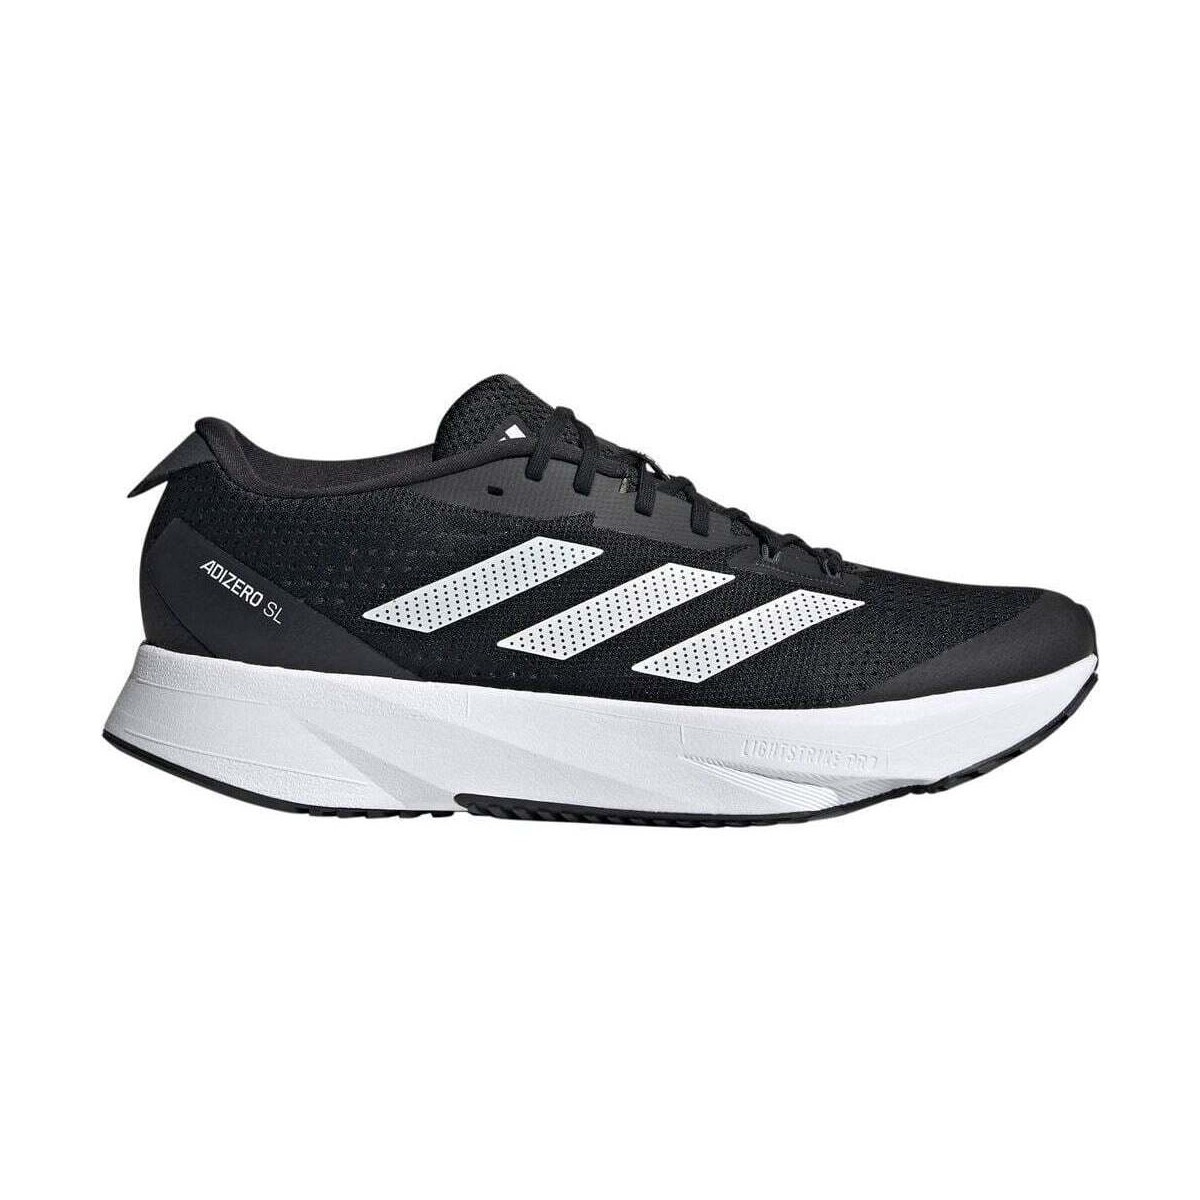 Zapatos Hombre Running / trail adidas Originals ADIZERO SL Negro